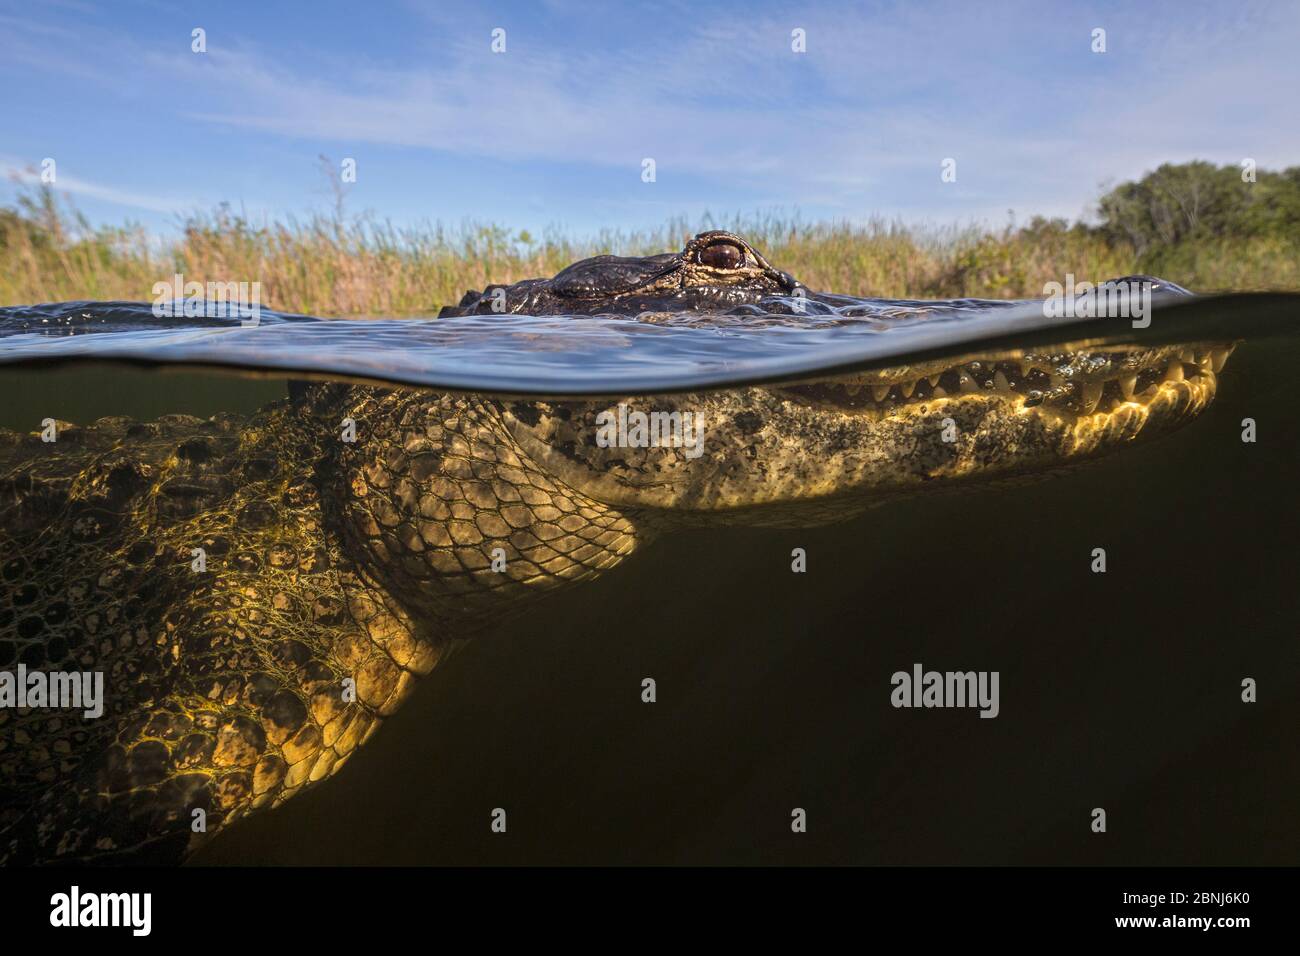 American alligator (Alligator mississippiensis) split level, Everglades, USA, January. Stock Photo